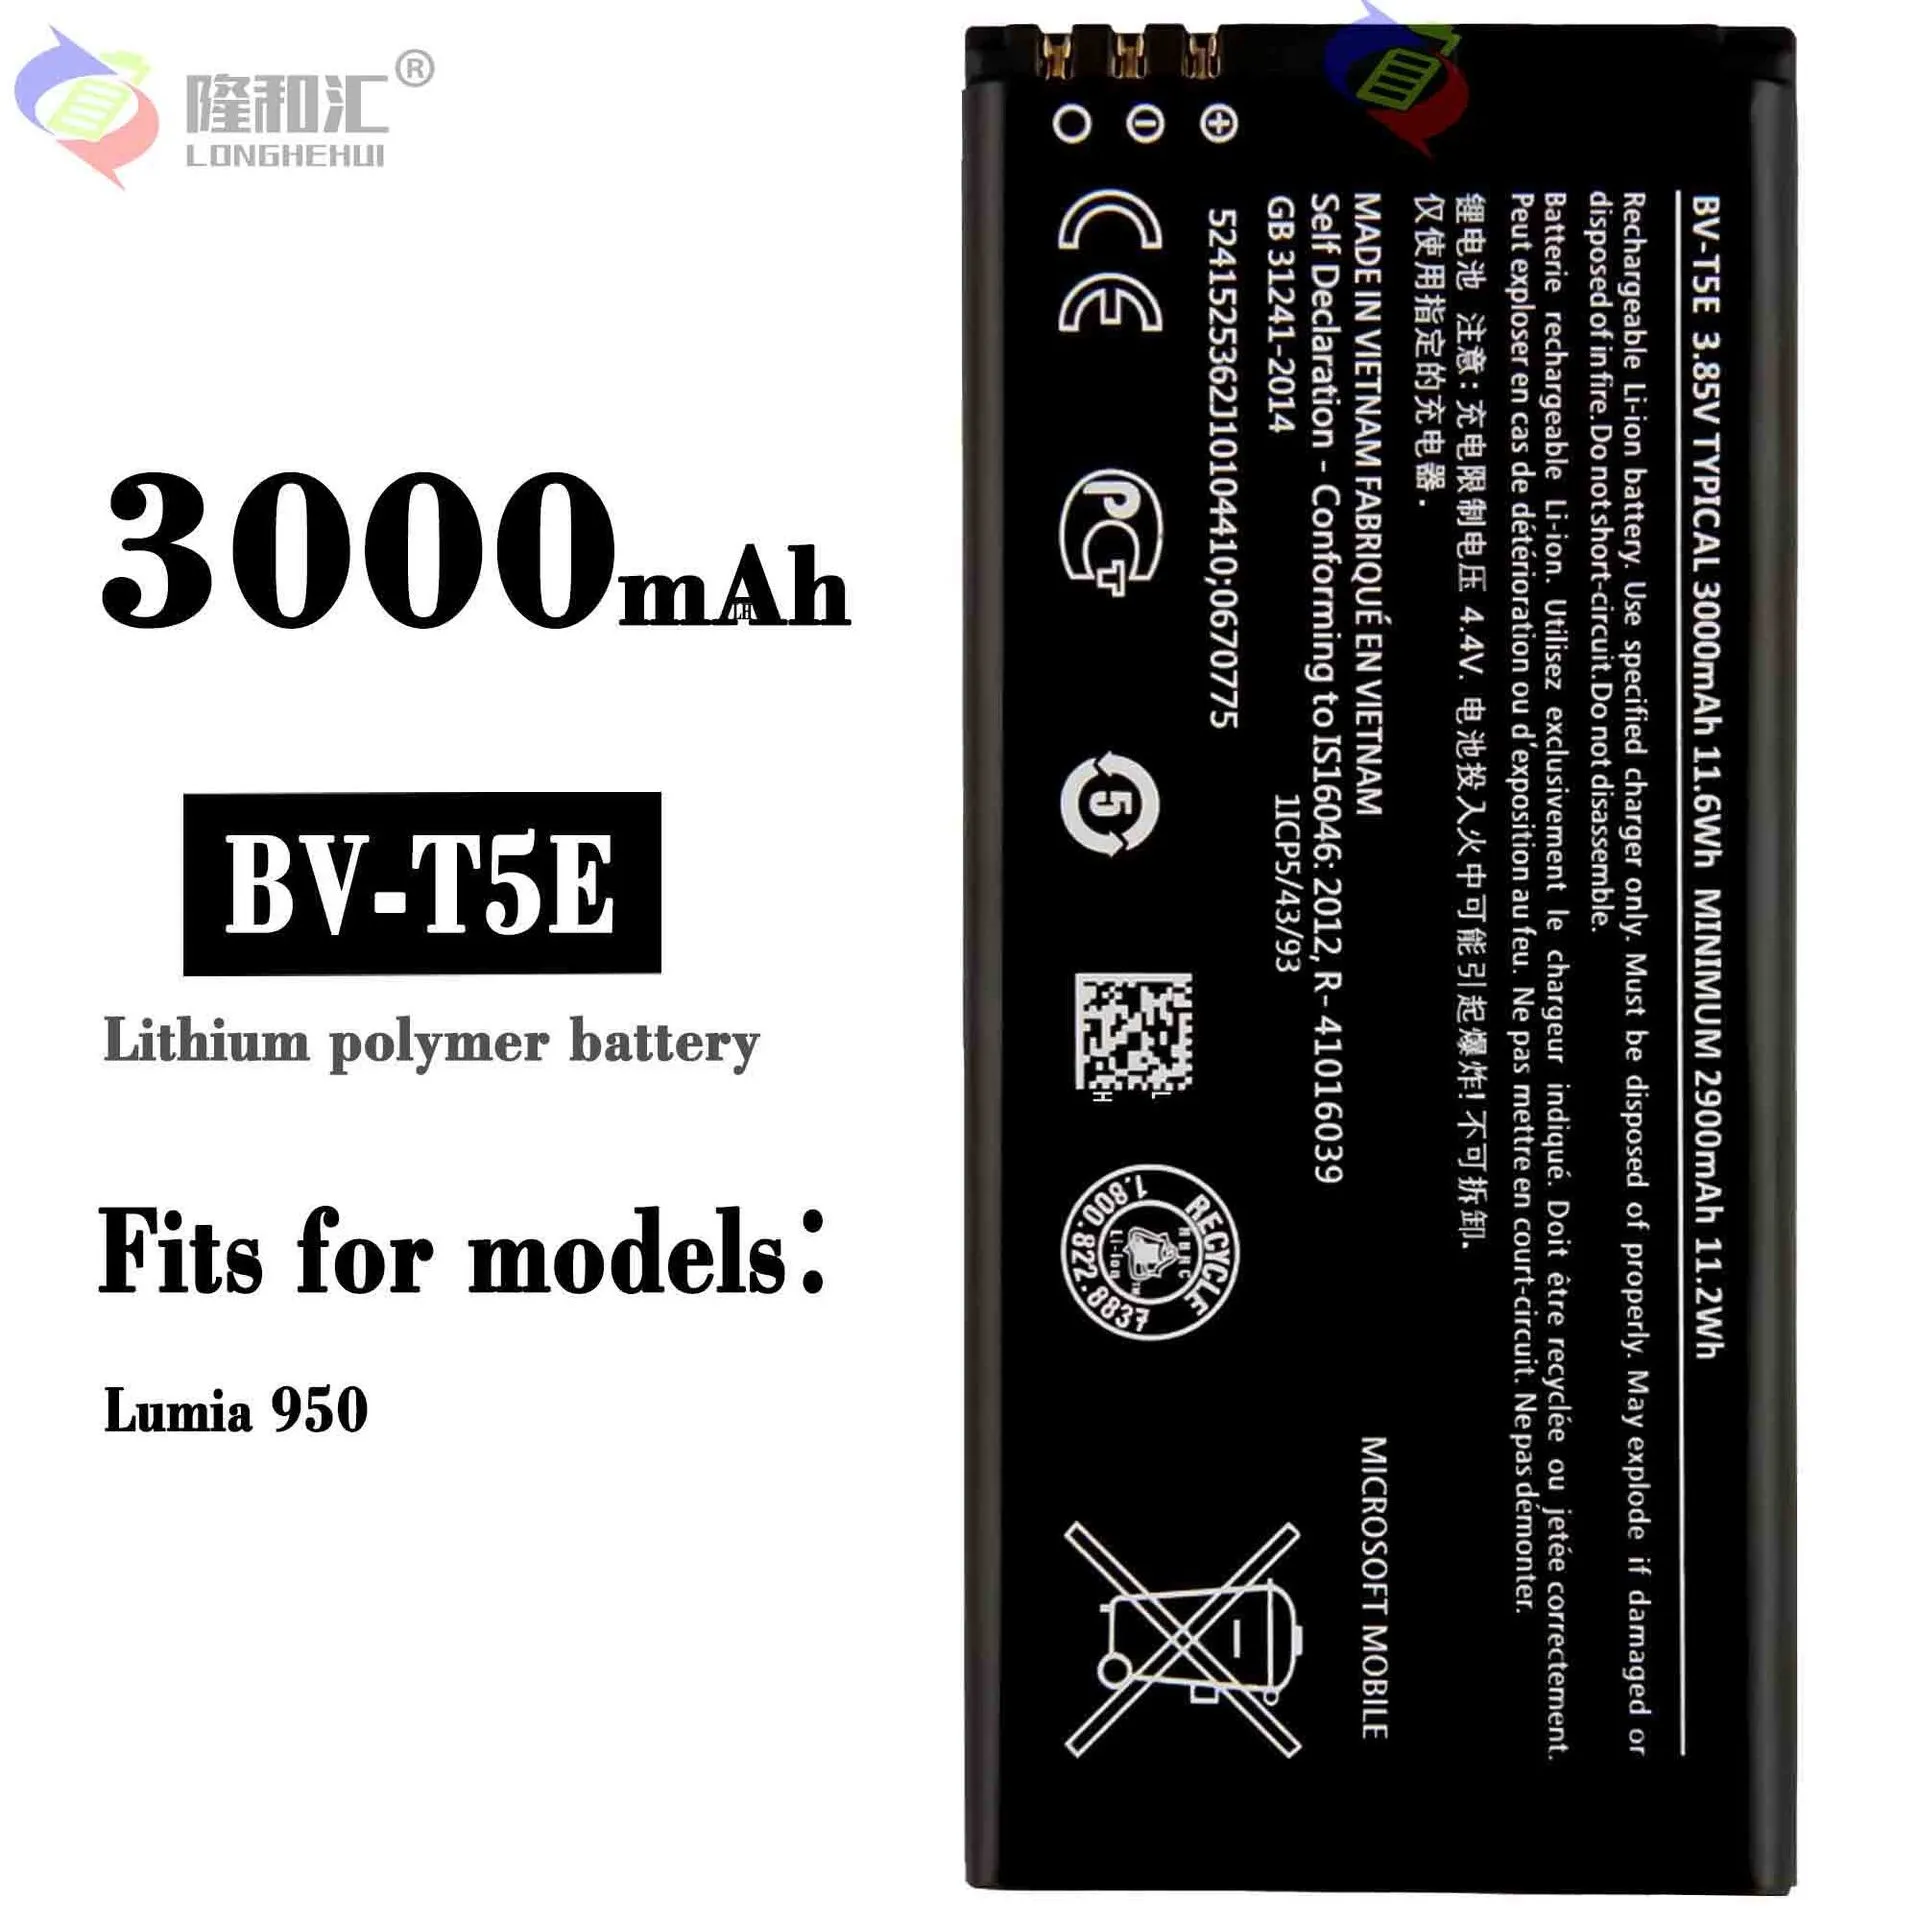 3000mAh BV-T5E battery for Microsoft Nokia Lumia 950 RM-1104 RM-1106 RM-110 BVT5E BV T5E Mobile phone battery